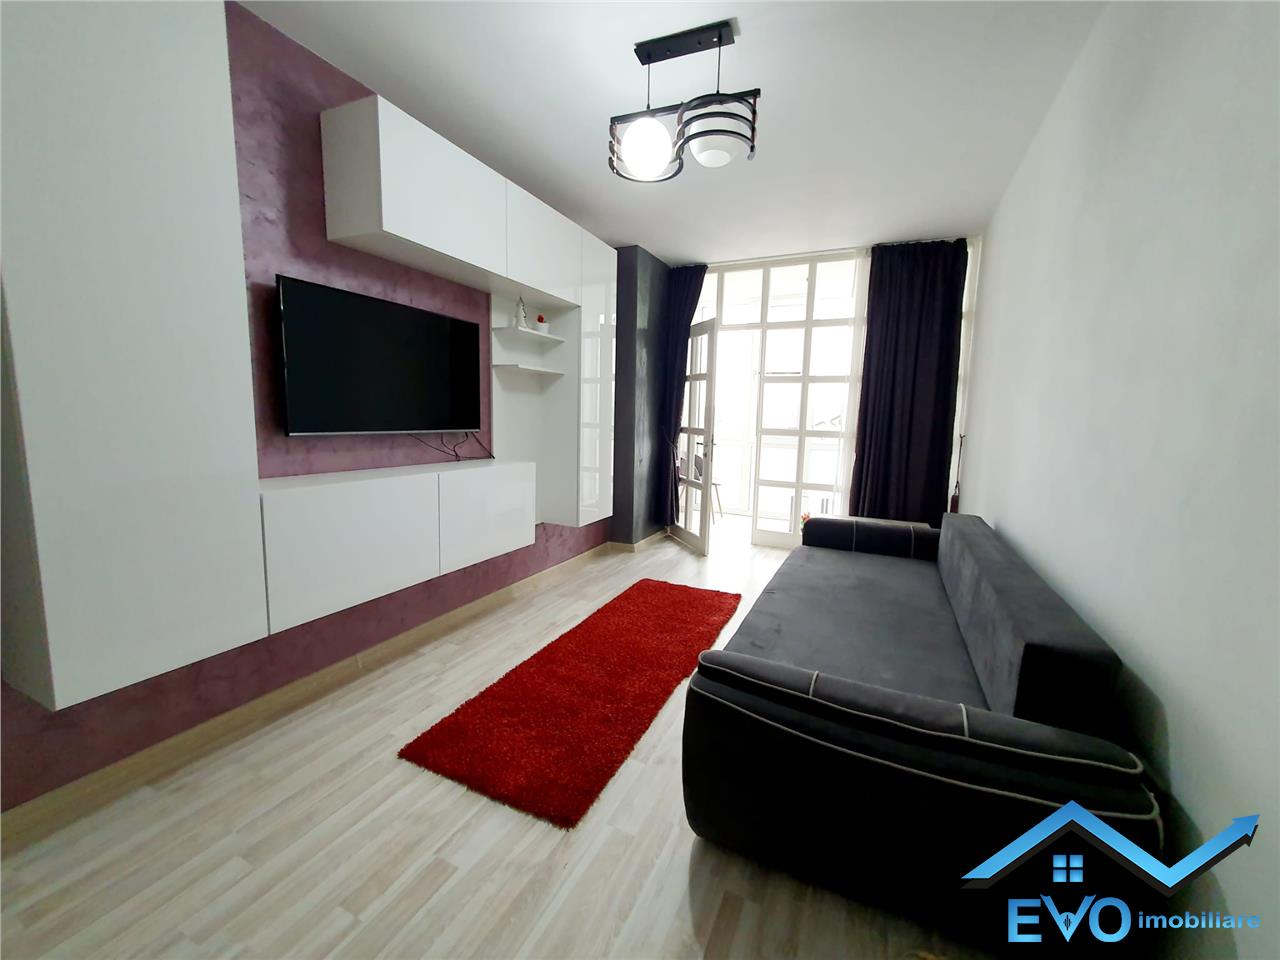 De inchiriat apartament cu 2 camere, decomandat, mobilat si utilat, in Visoianu, Iasi